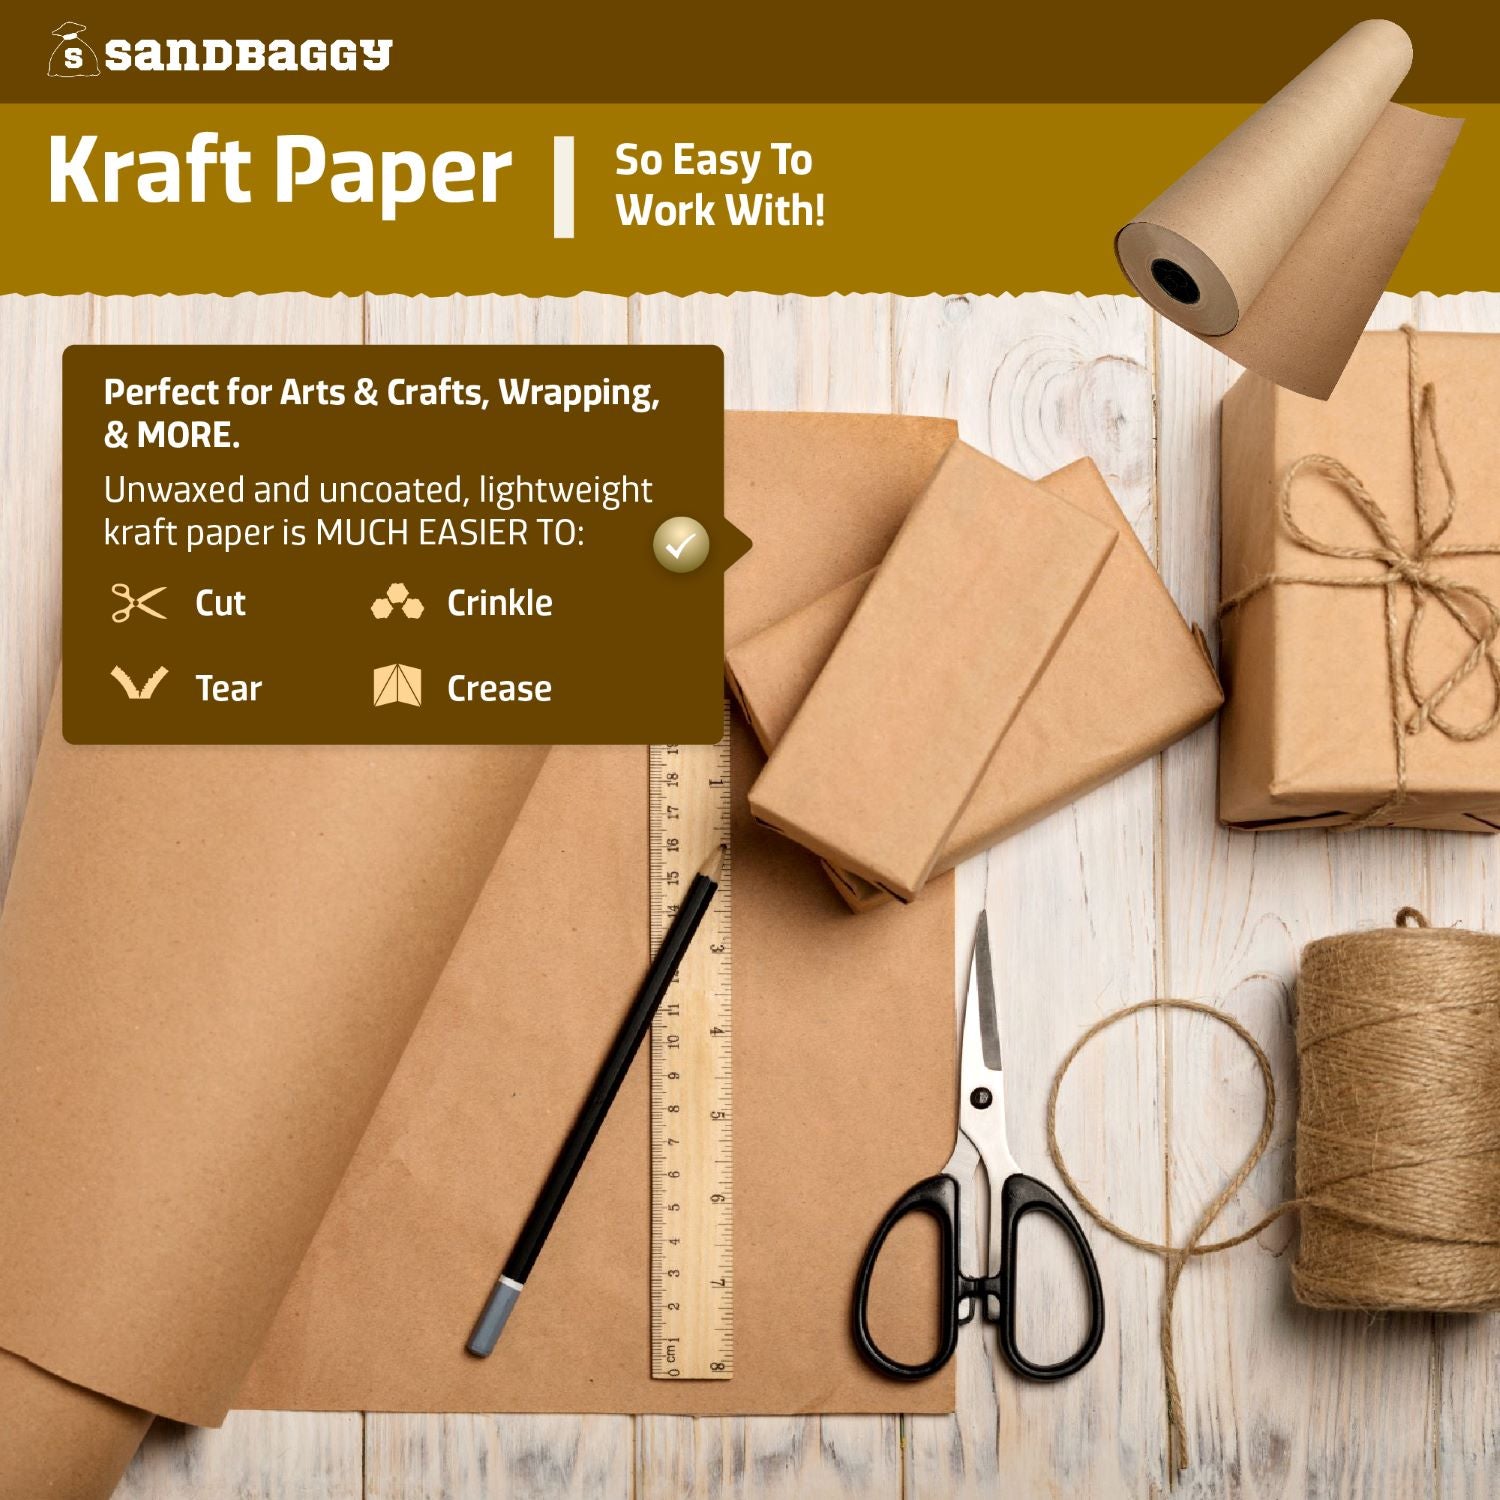 Matt Red Kraft Wrapping Paper Sustainable Eco Friendly Kraft 